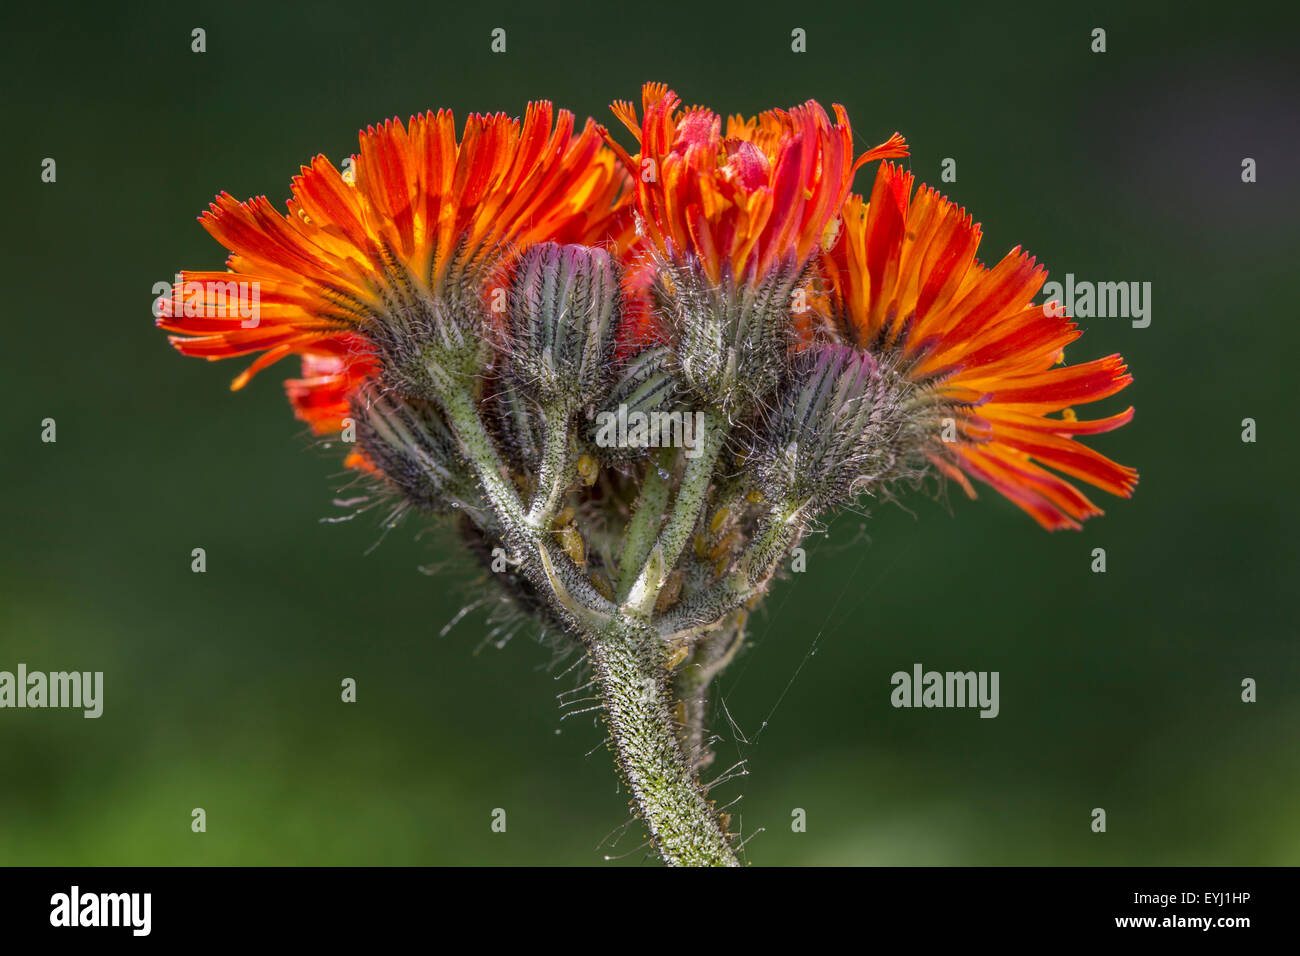 Fox-and-cubs / orange hawkweed / tawny hawkweed / devil's paintbrush (Hieracium aurantiacum / Pilosella aurantiaca) in flower Stock Photo